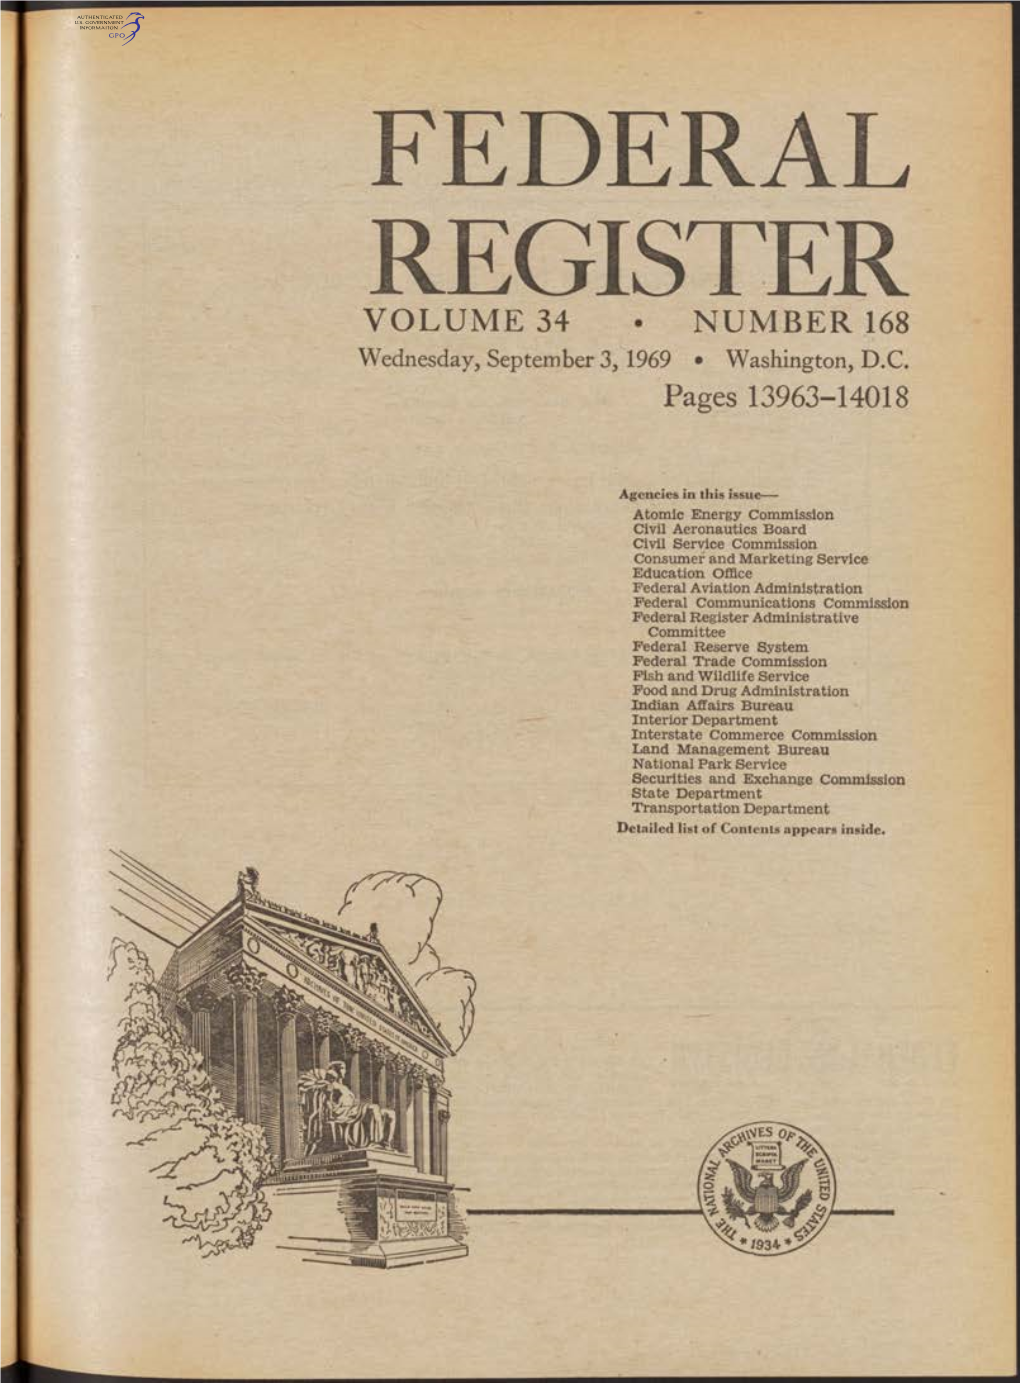 FEDERAL REGISTER V O L U M E 34 • N U M B E R 168 Wednesday, September 3,1969 • Washington, D.C